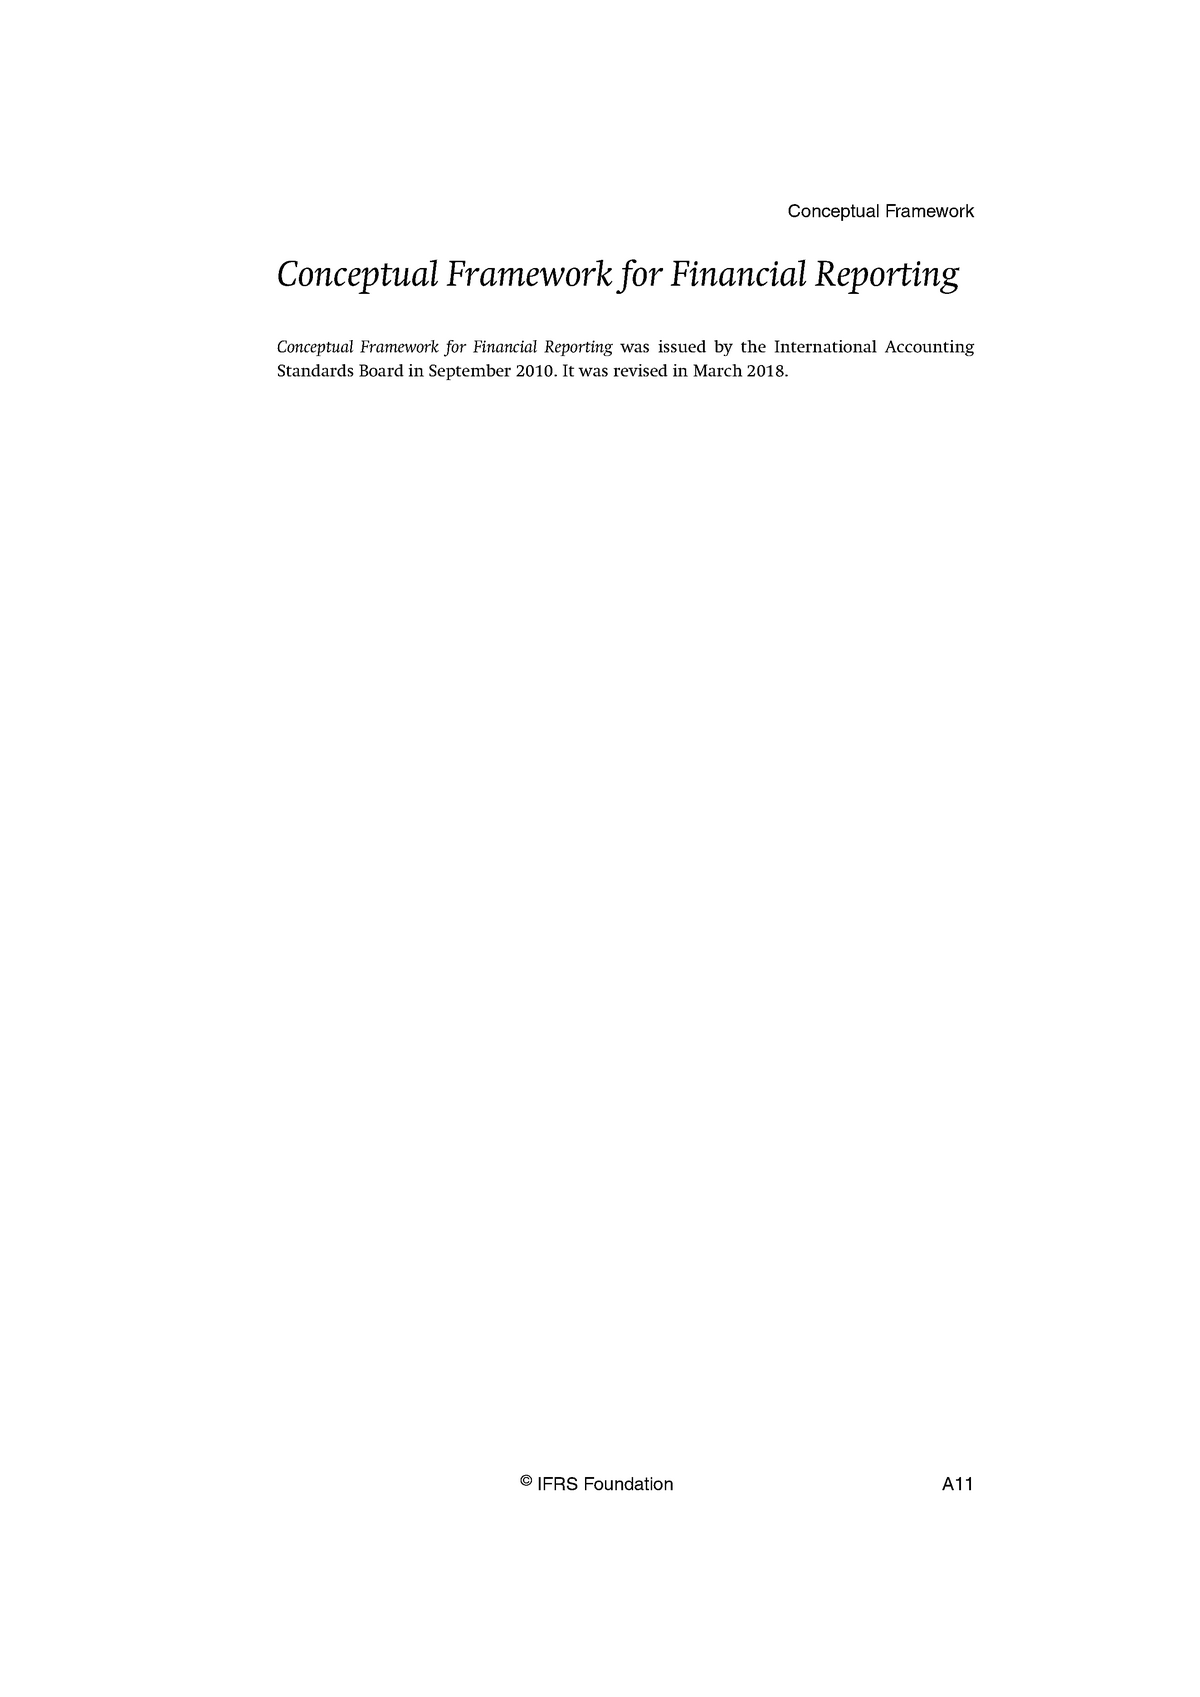 Conceptual Framework for Financial Reporting - Conceptual Framework for ...